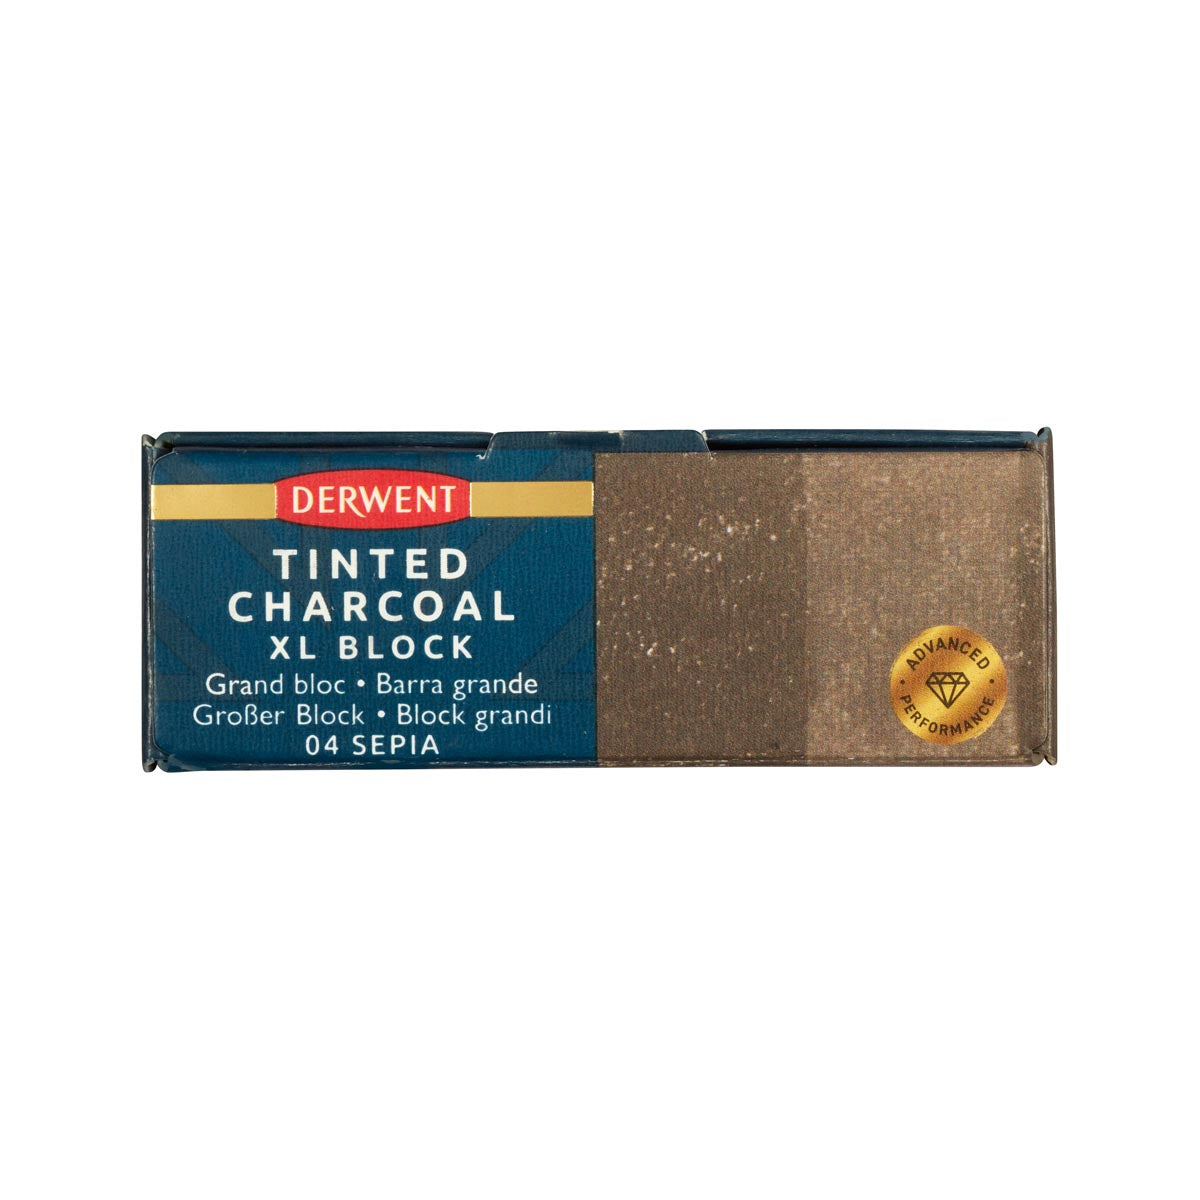 Derwent - Tinted Charcoal XL Block - Sepia